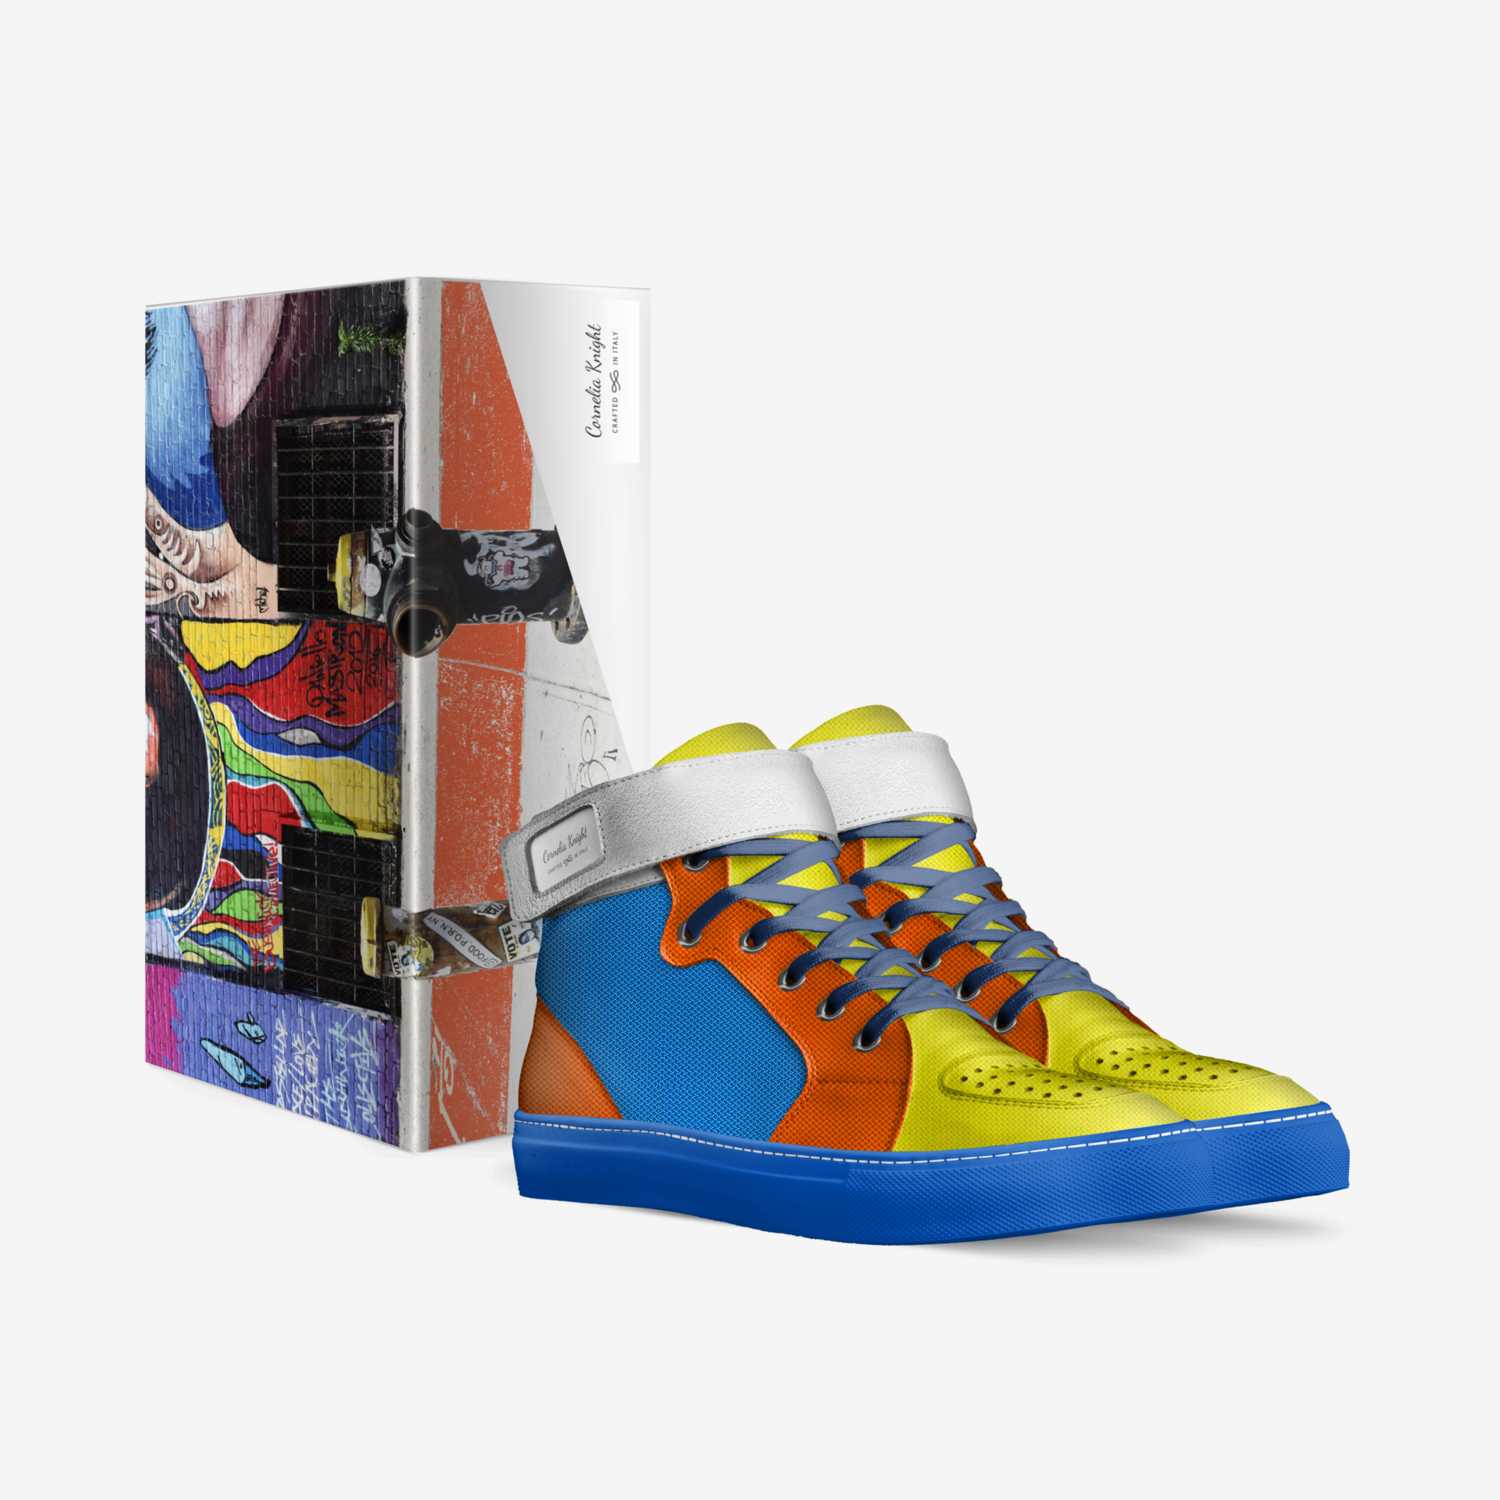 Stormz custom made in Italy shoes by Cornelia Knight | Box view